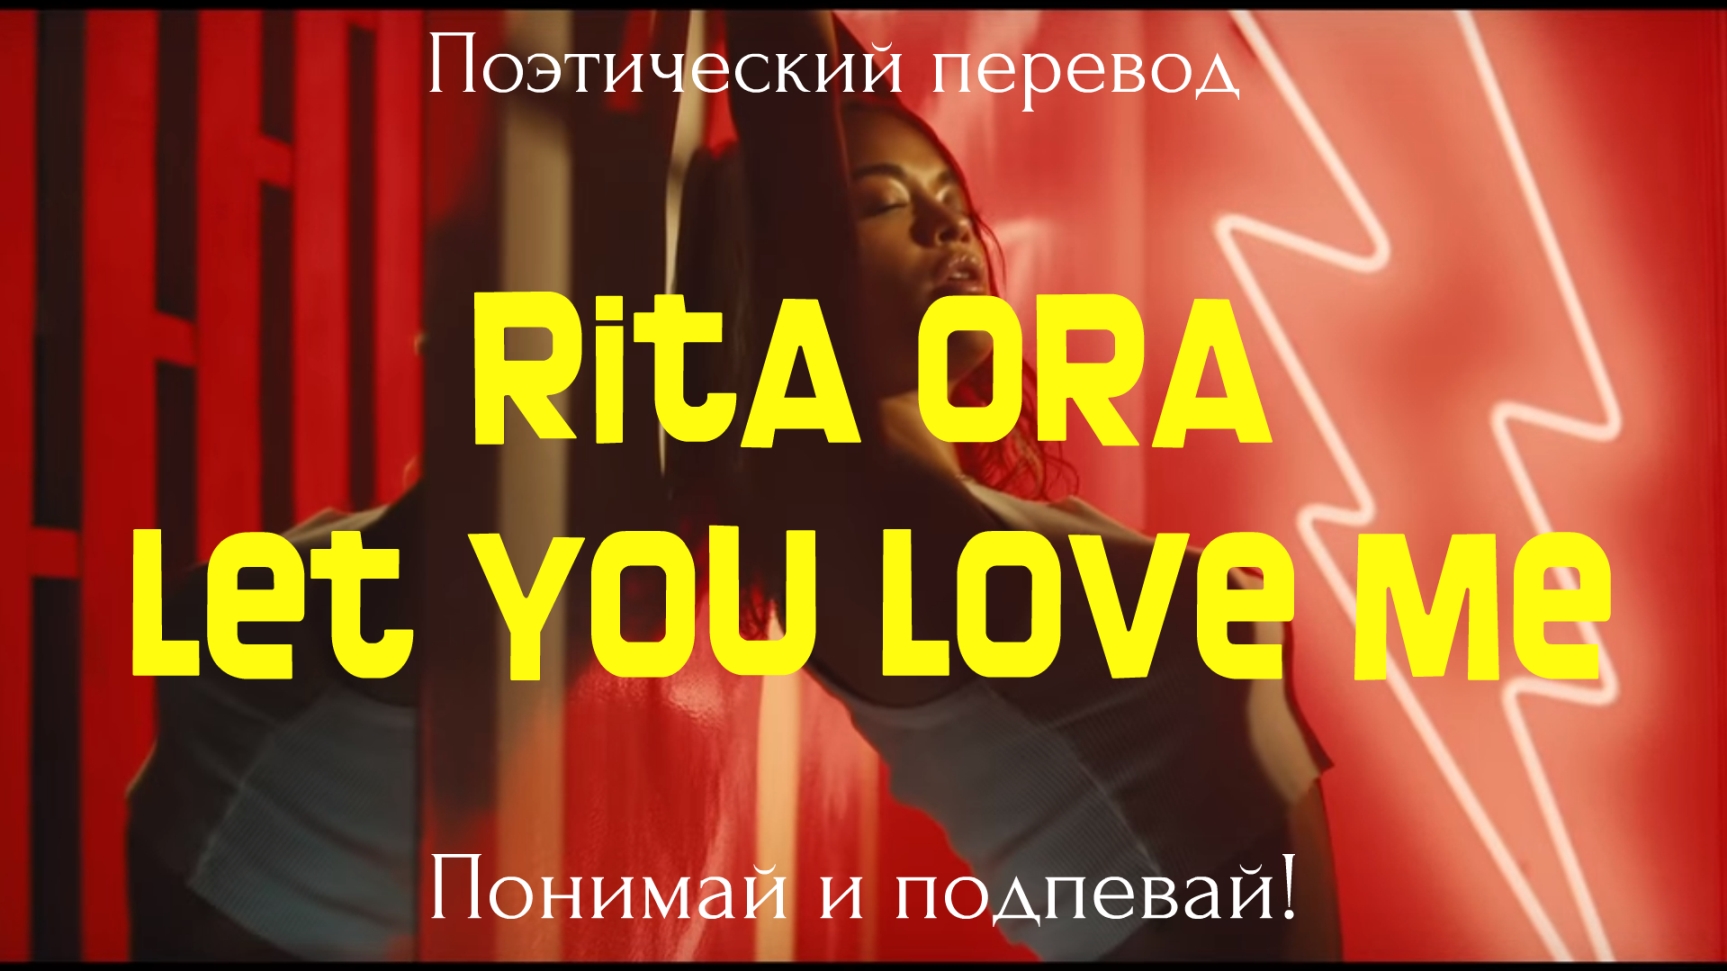 Ora let. Let you Love me Rita ora текст. Rita ora Let you Love me перевод. Rita ora Let you Love me обложка.